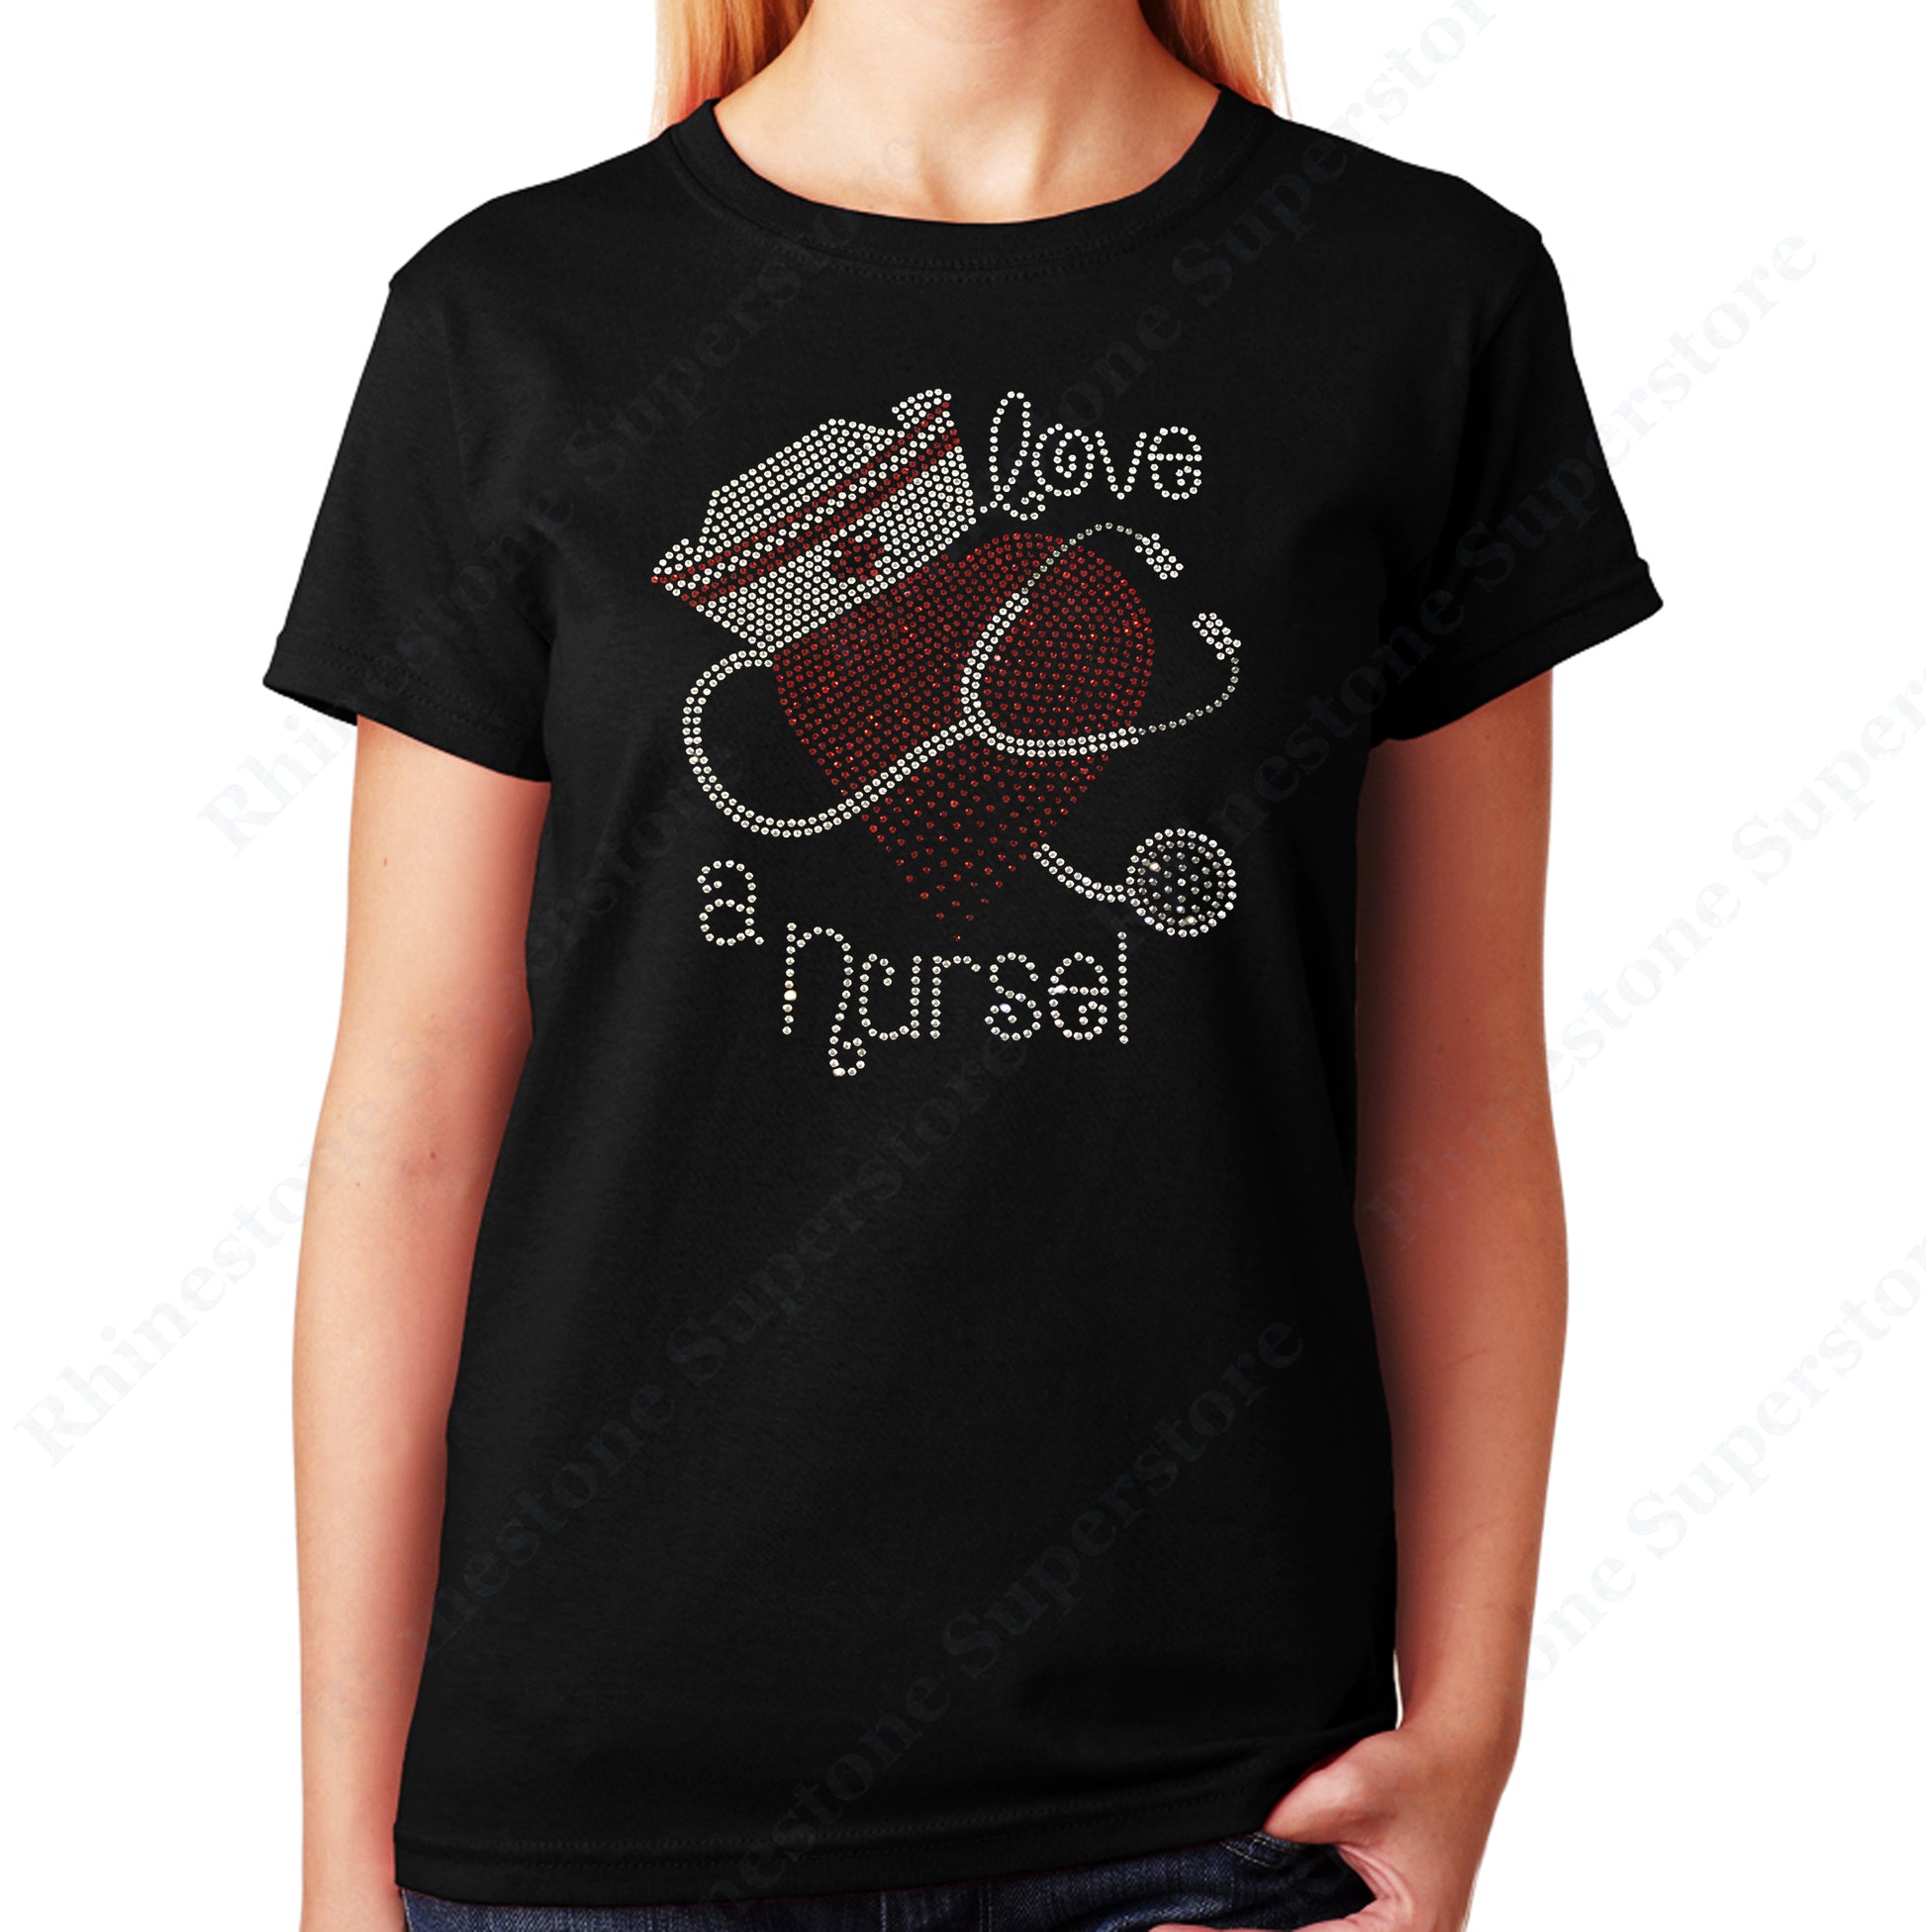 Unisex T-Shirt with Love a Nurse in Rhinestones